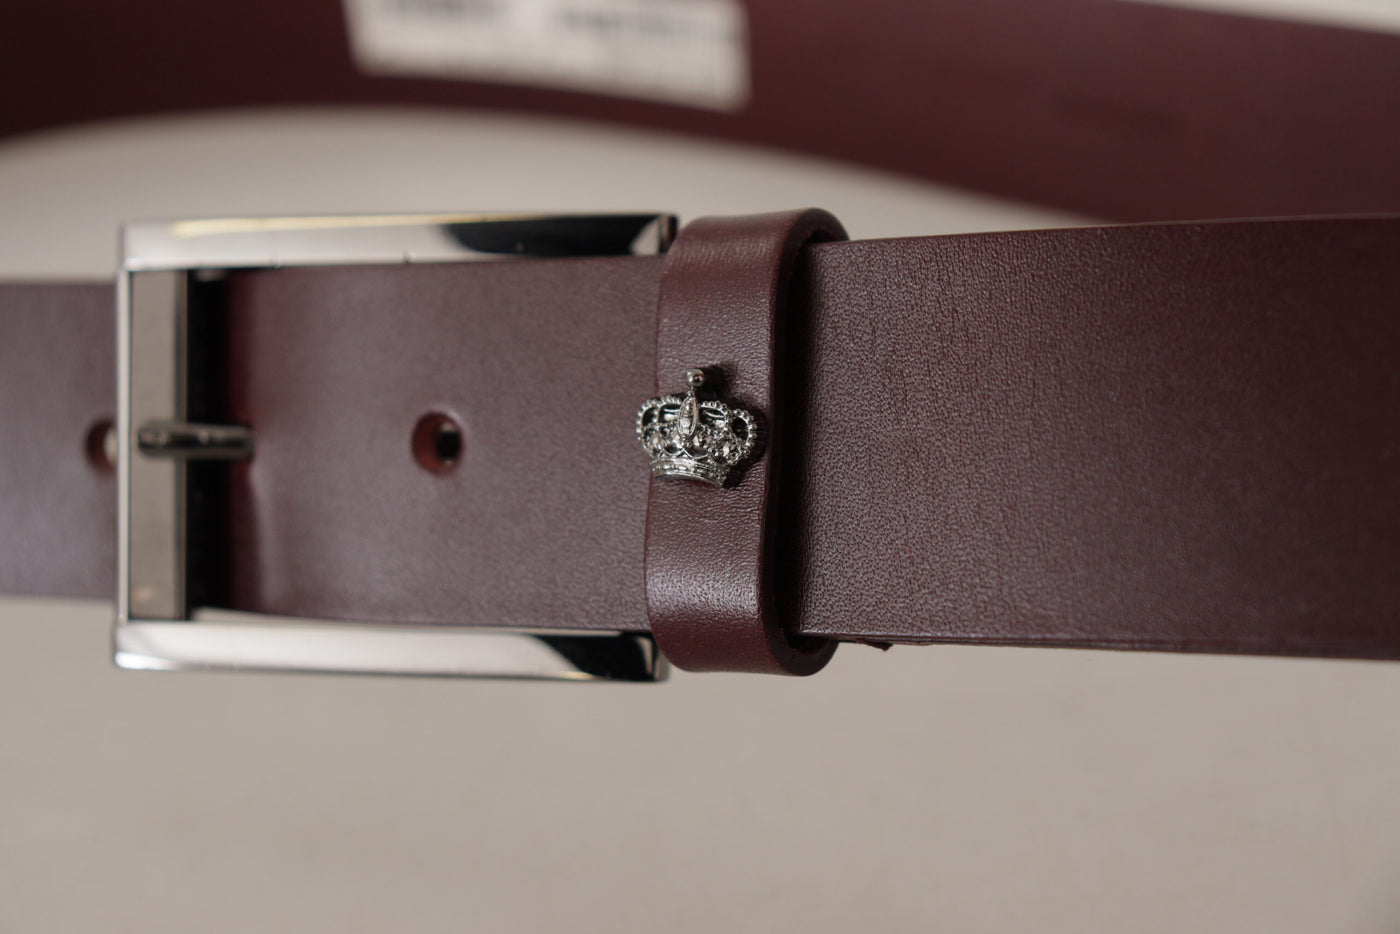 Dolce & Gabbana Brown Leather Silver Metal Crown Buckle Belt